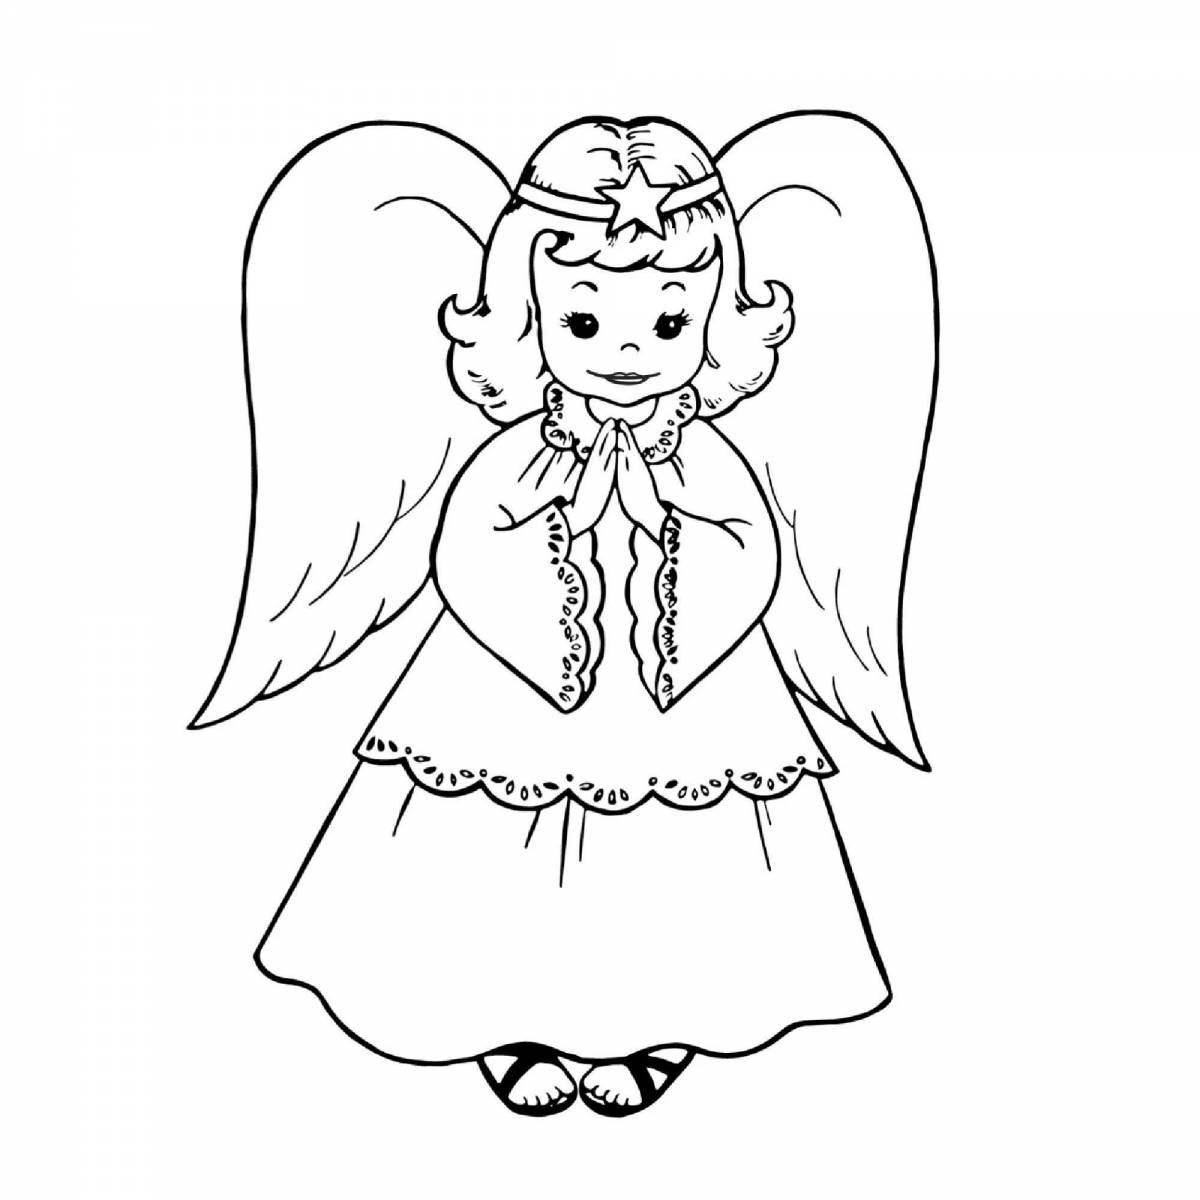 Angel face #8